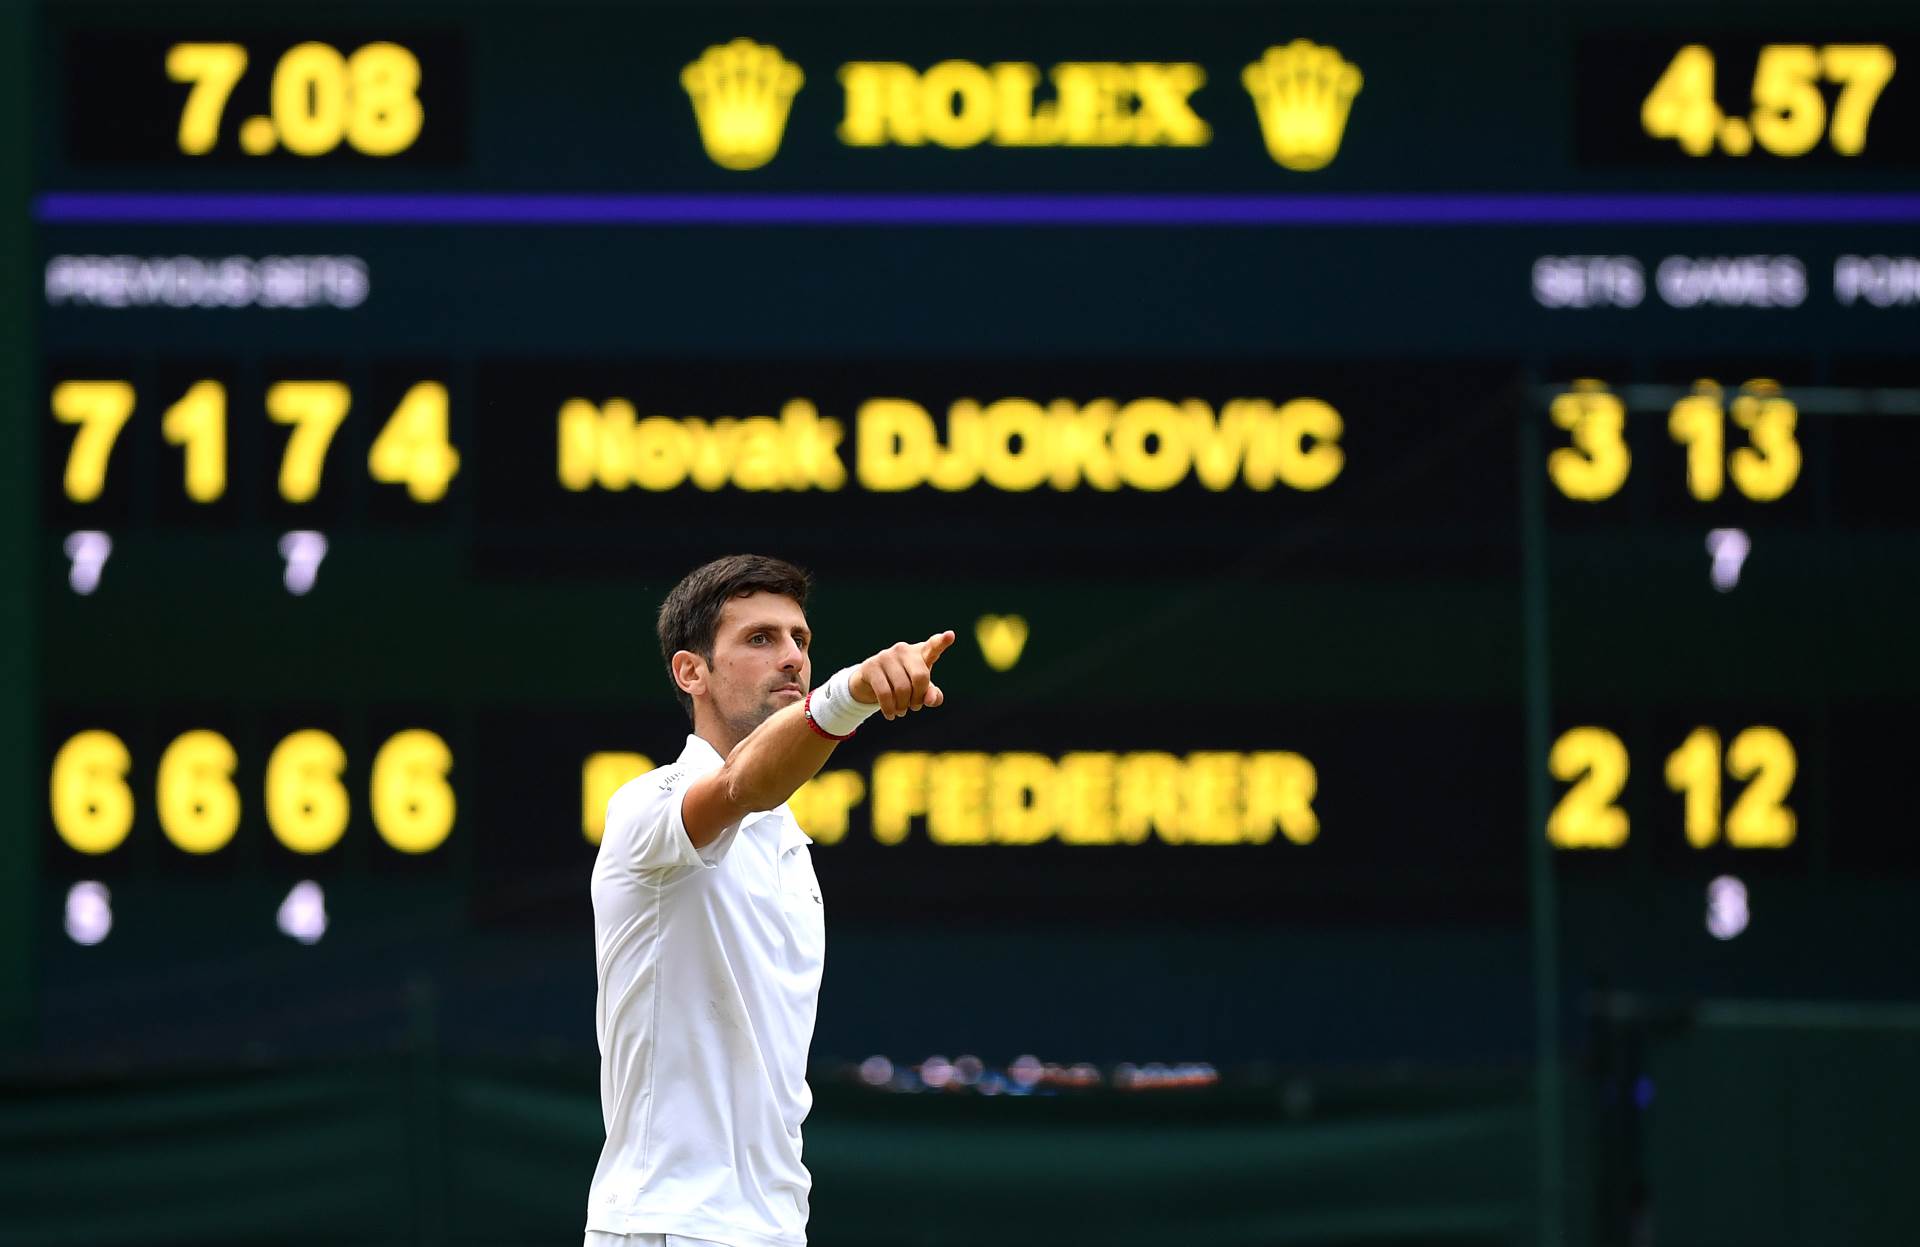  Endi-Rodik-o-finalu-Djokovic-Federer-Vimbldon-2019-Rodik-Djokovic-nesto-sto-nikad-nisam-video 